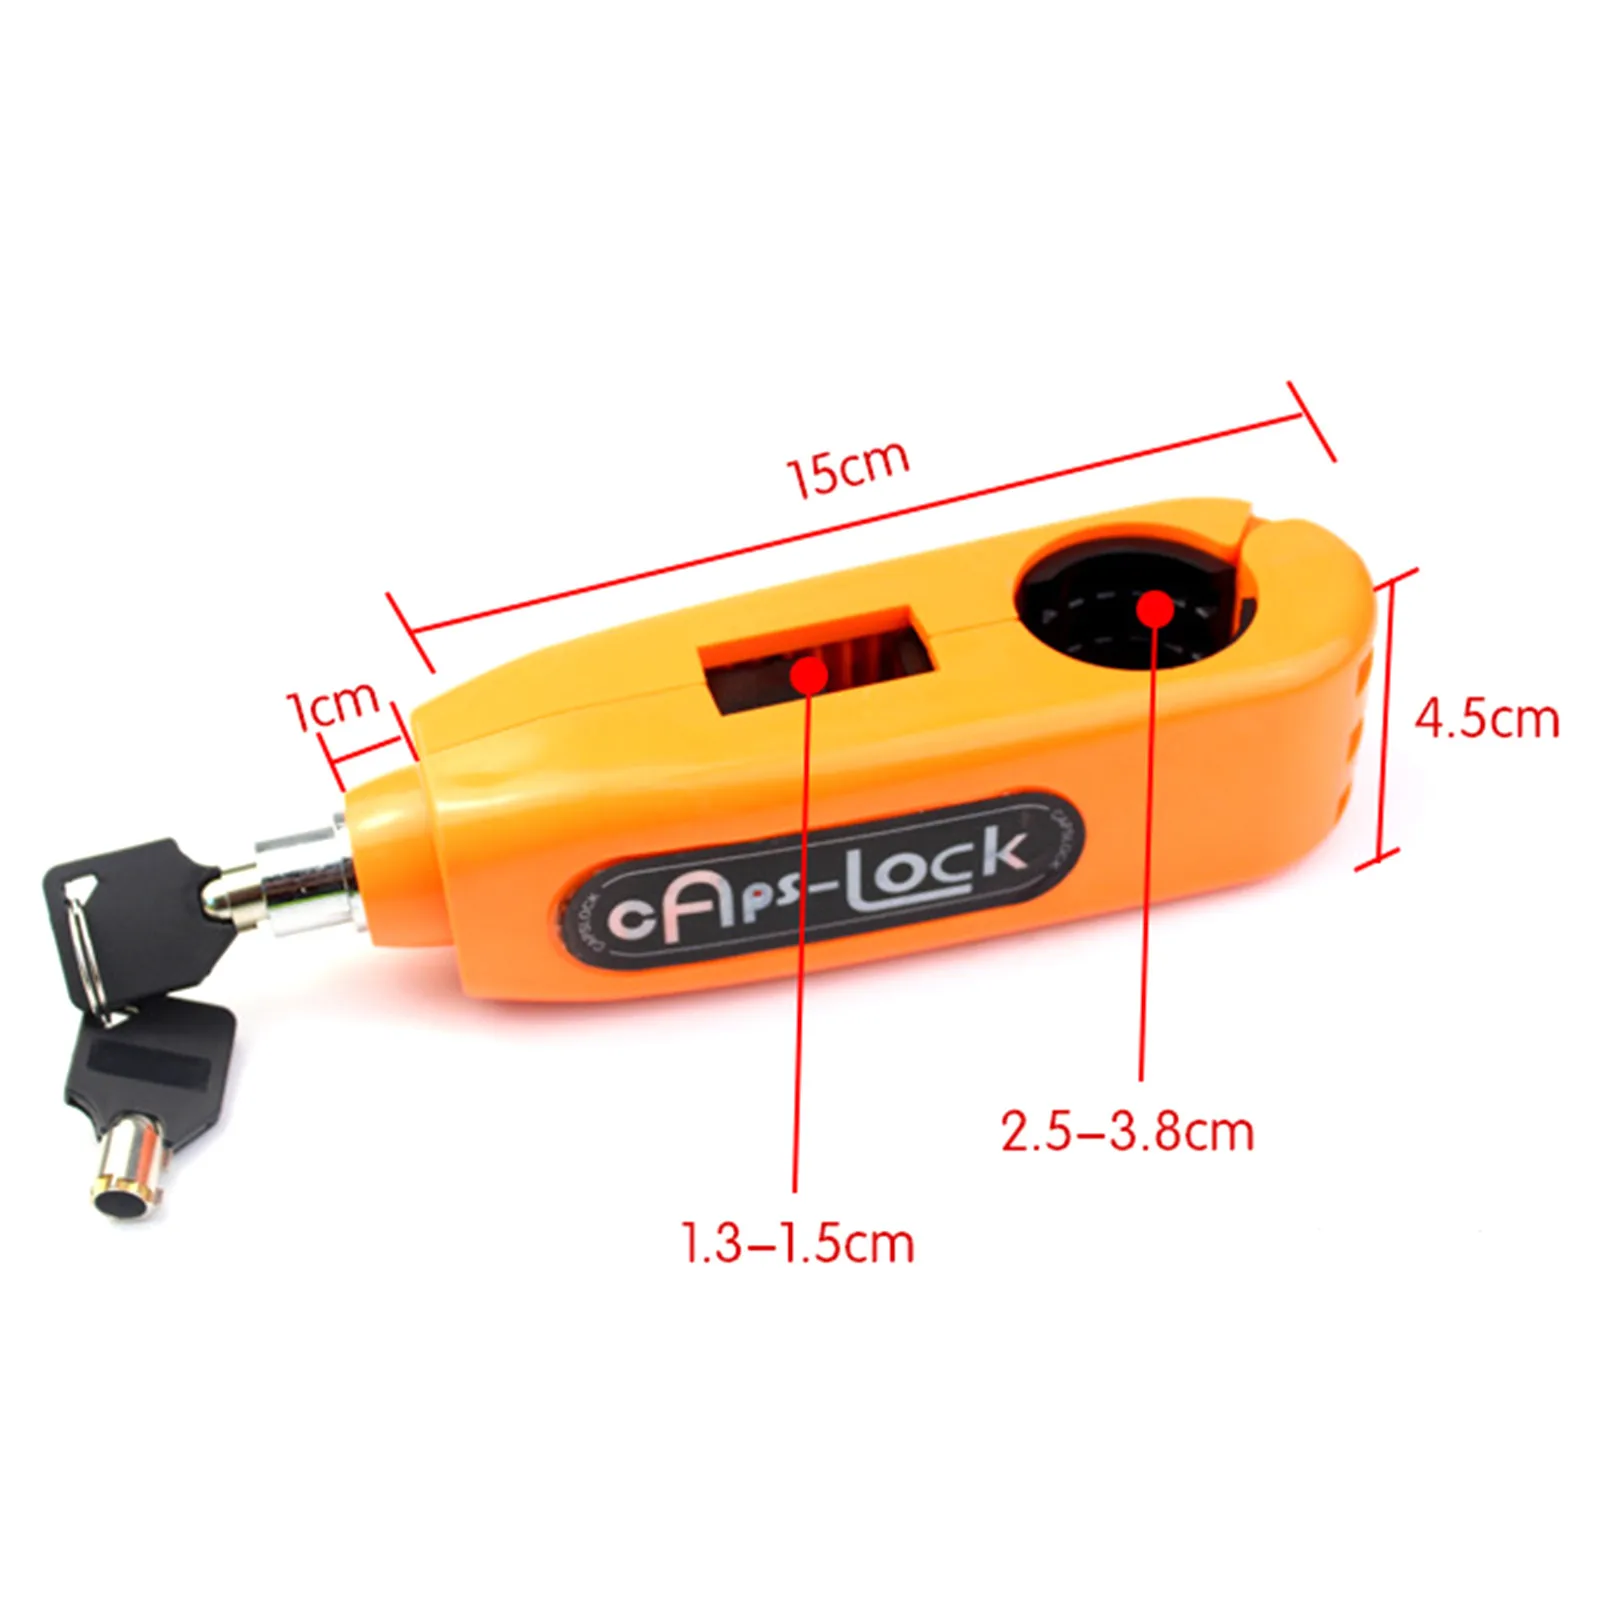 

Professional Throttle Handlebar Lock Motorcycle Alarm Locks Durable Reliable Handle Security Anti-theft Lock Tool Accessories